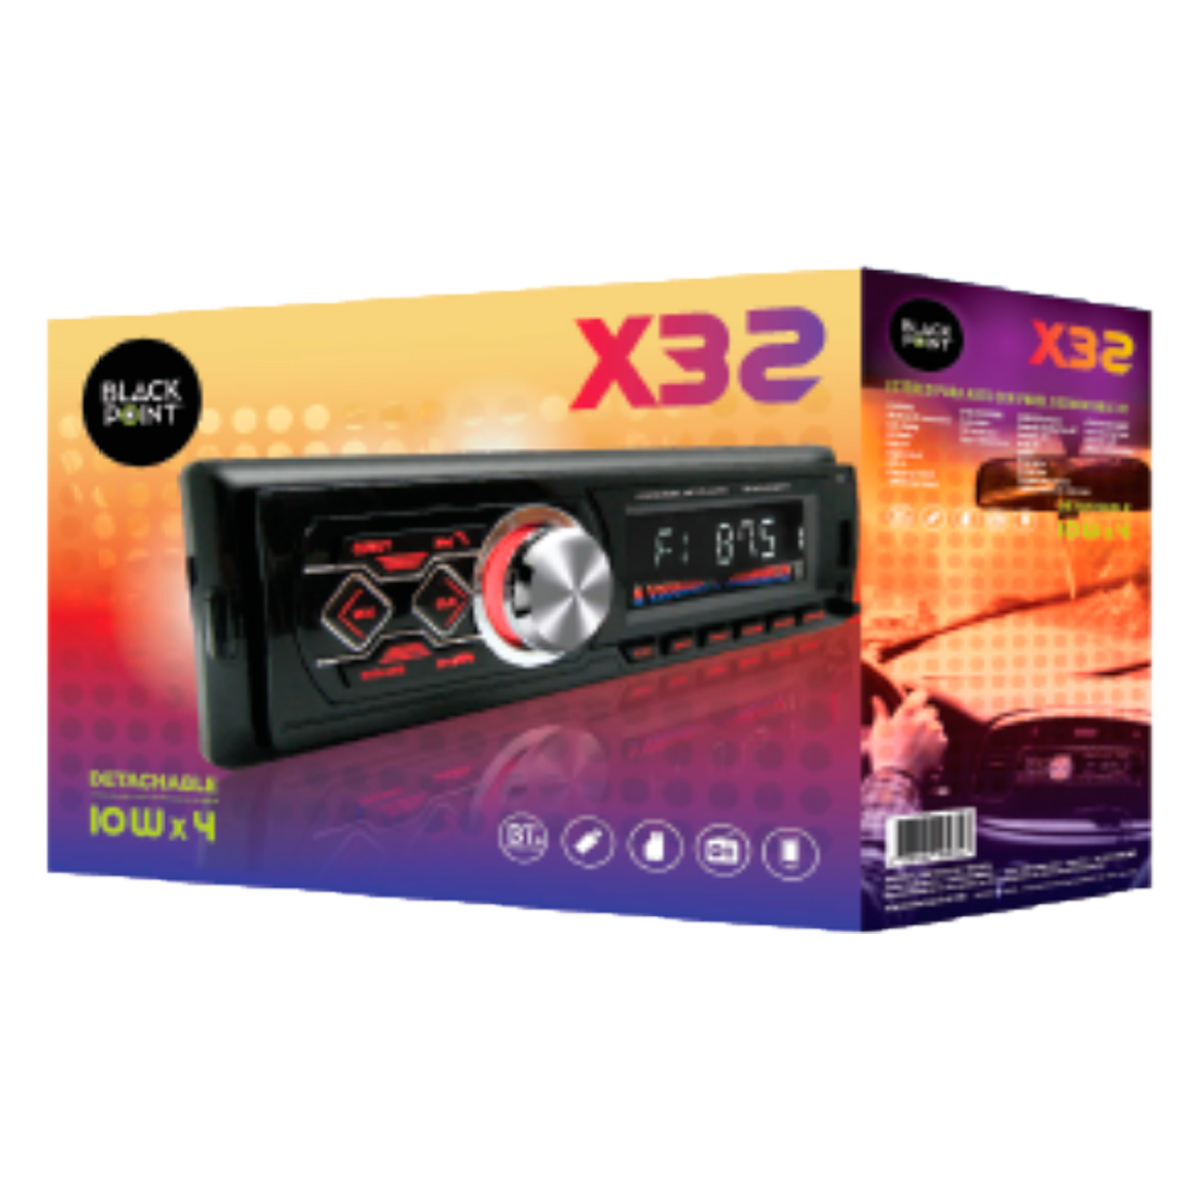 X-32-OUT Blackpoint                                                   | AUTOESTÉREO BLUETOOTH BLACKPOINT FM AUX USB POTENCIA X-32 OUTLET                                                                                                                                                                                          